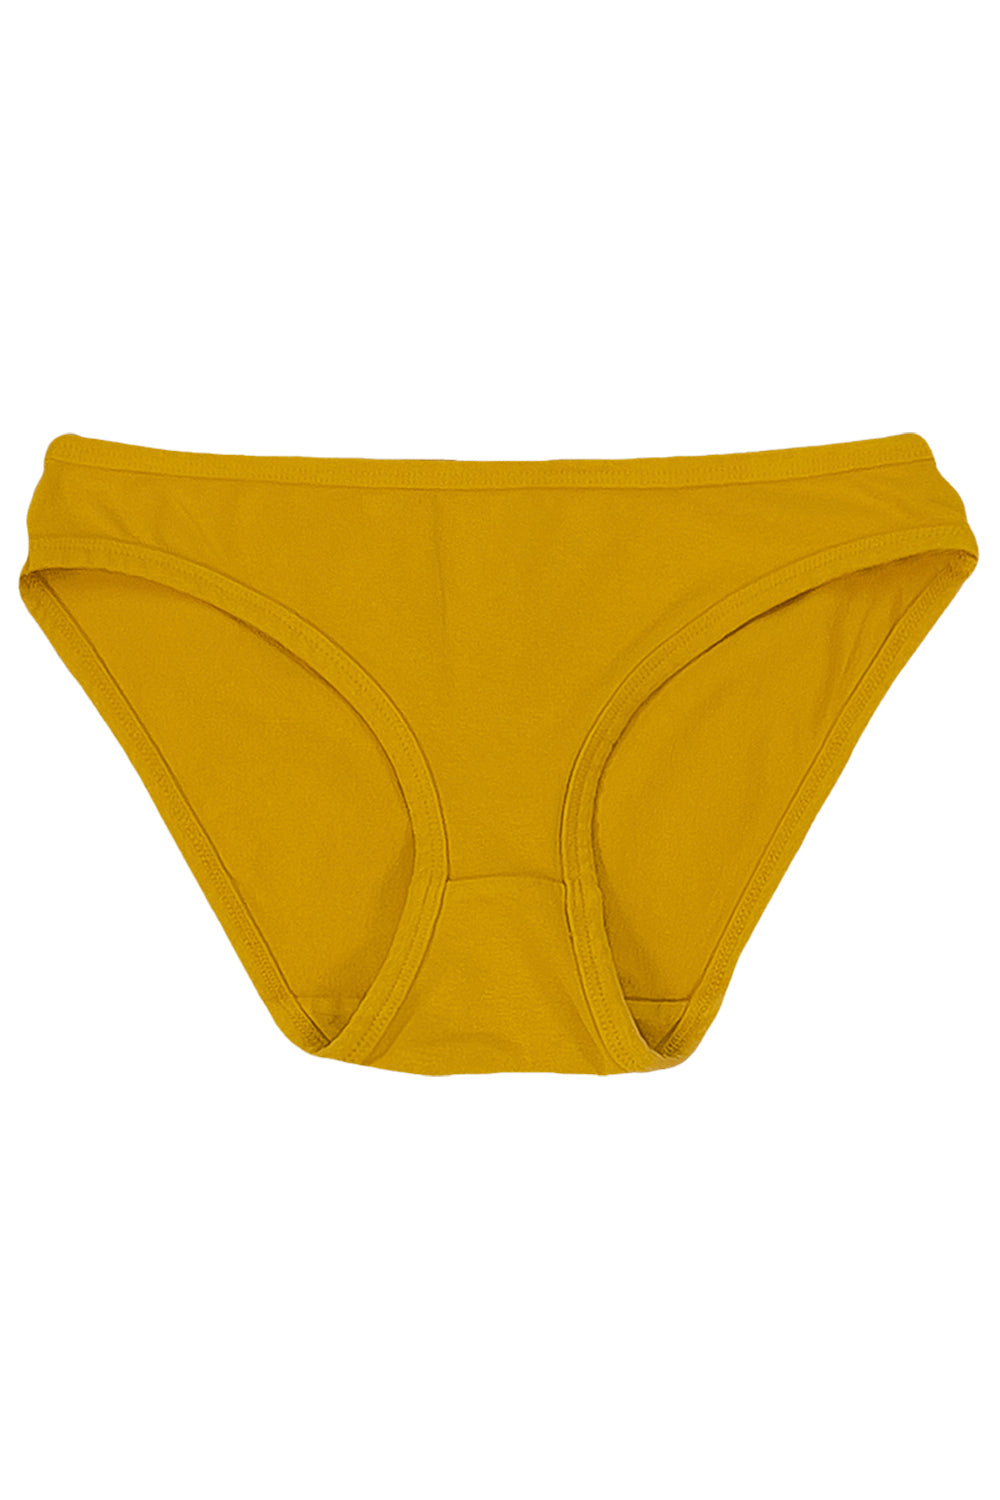 Bikini Brief | Jungmaven Hemp Clothing & Accessories / Color: Spicy Mustard